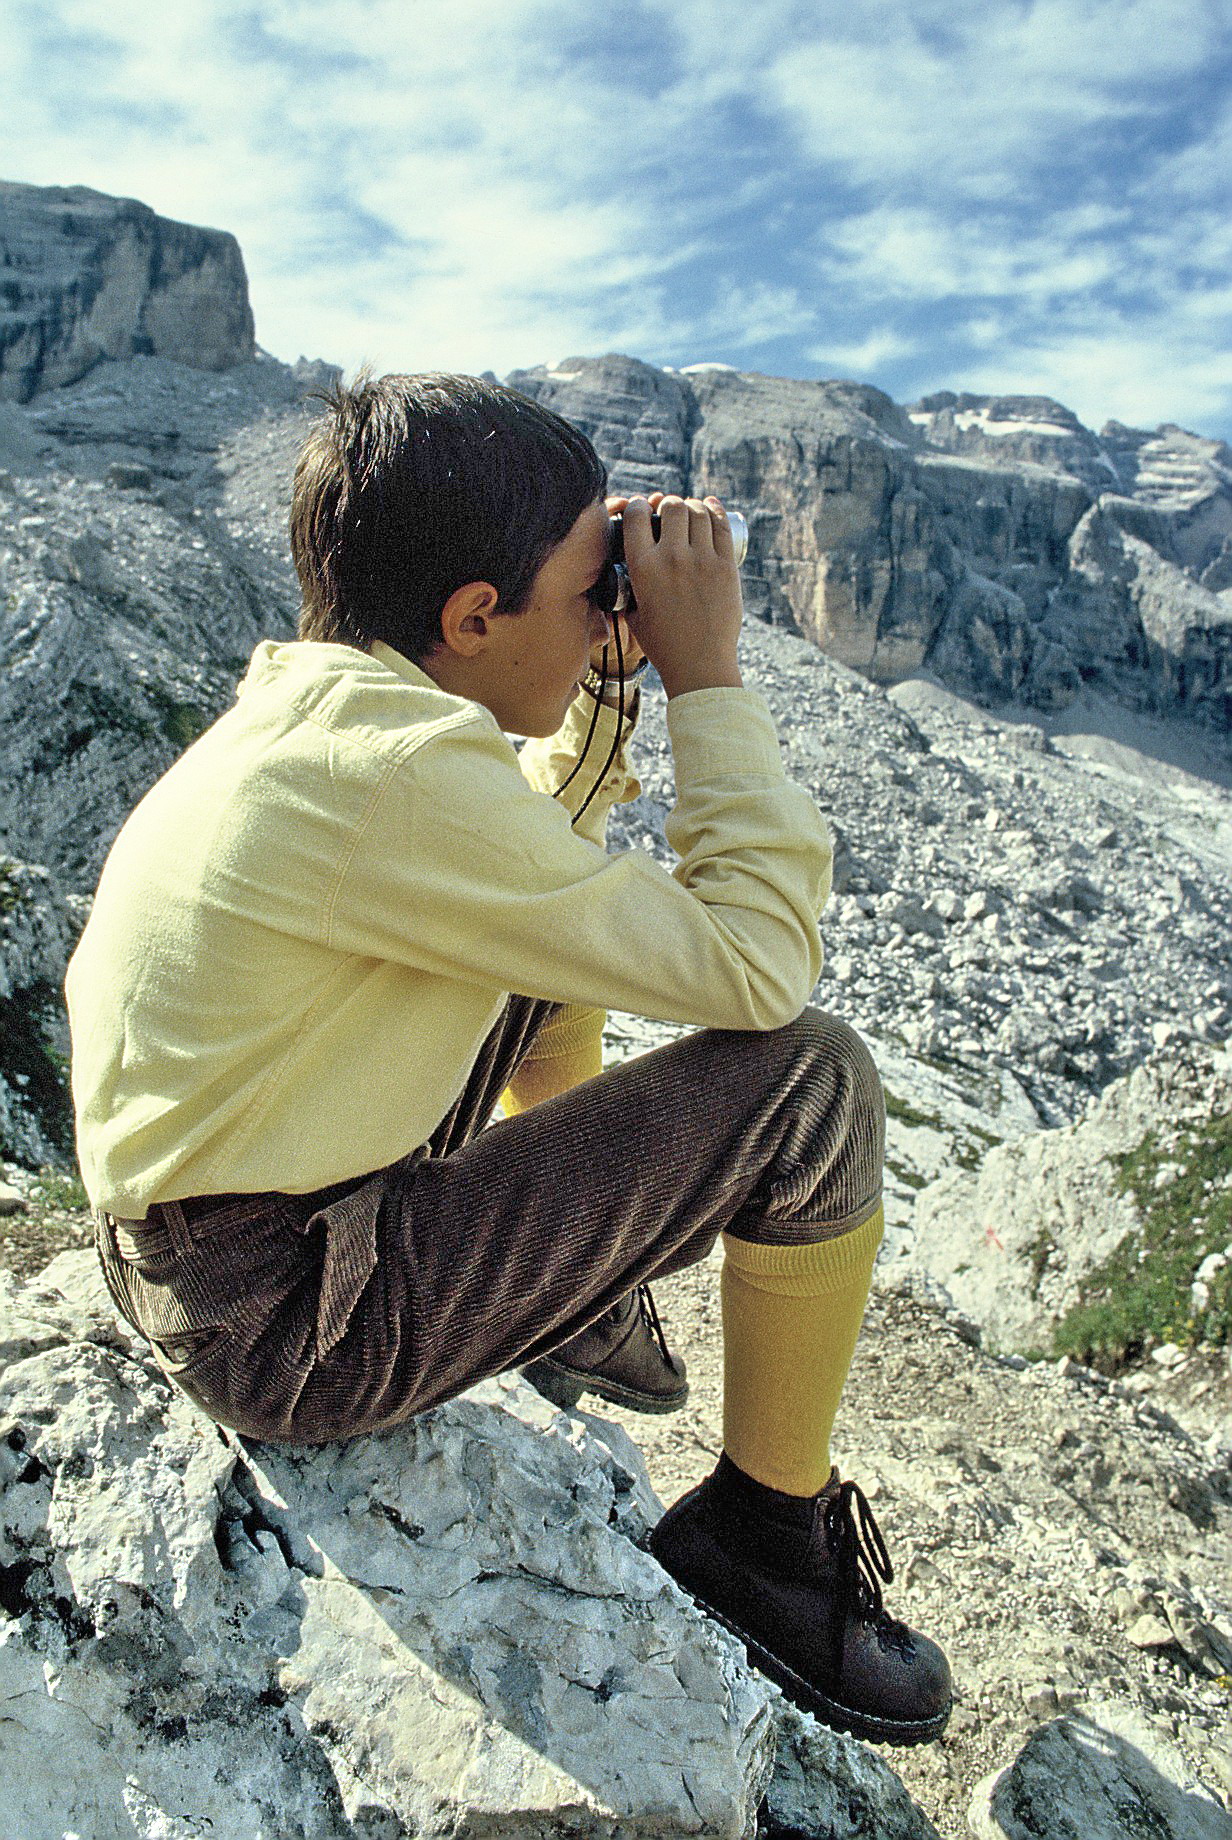 Il biowatching non esclude il birdwatching, Alpi italiane (2006) - foto Francesco Mezzatesta